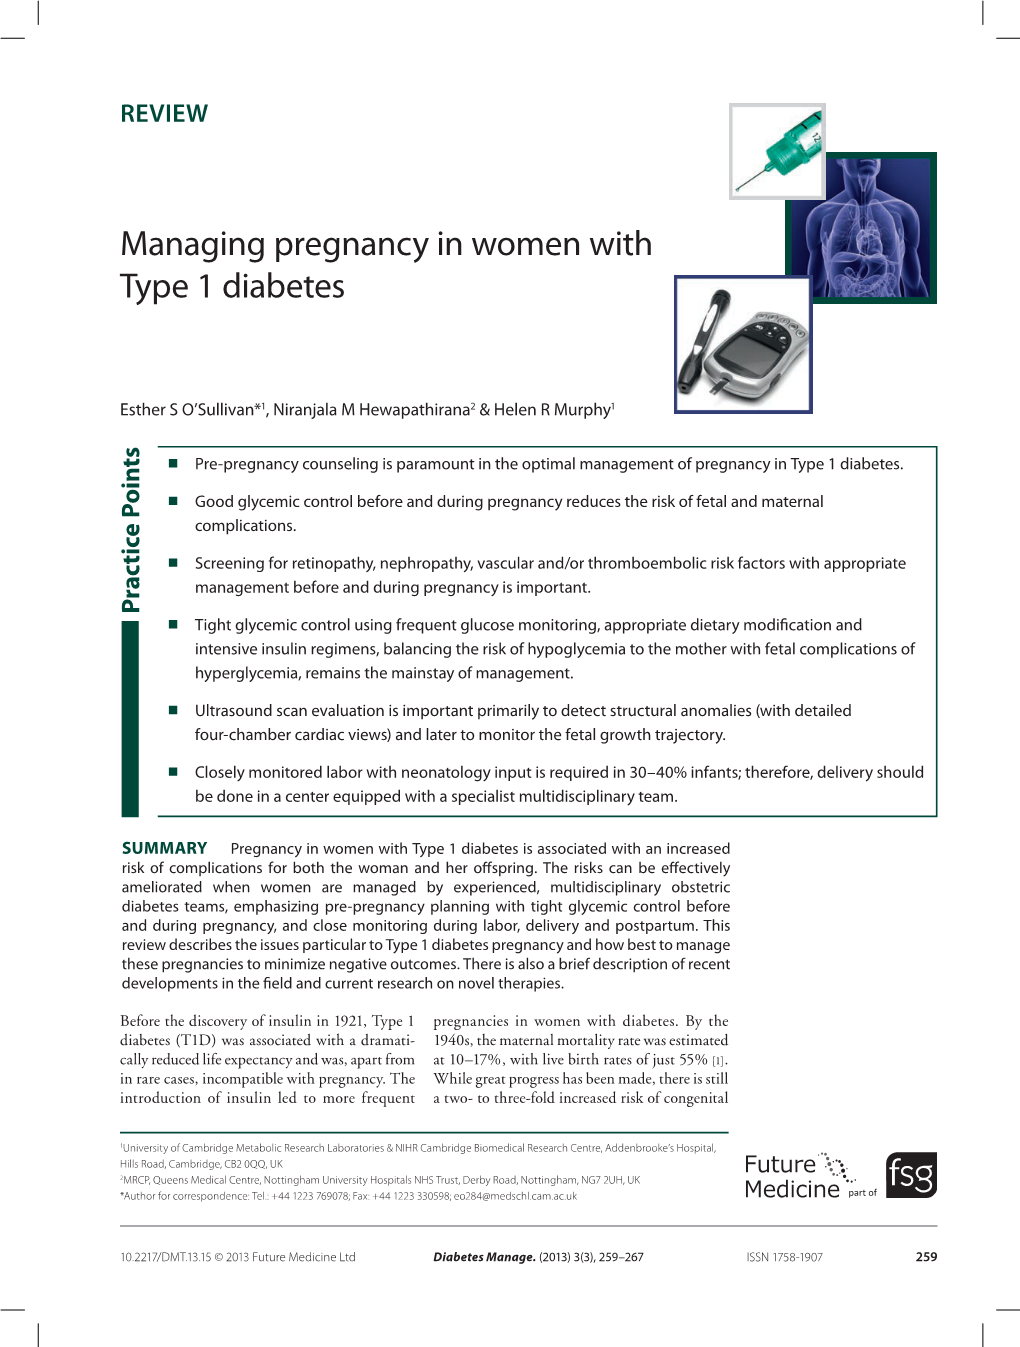 Managing Pregnancy in Women with Type 1 Diabetes